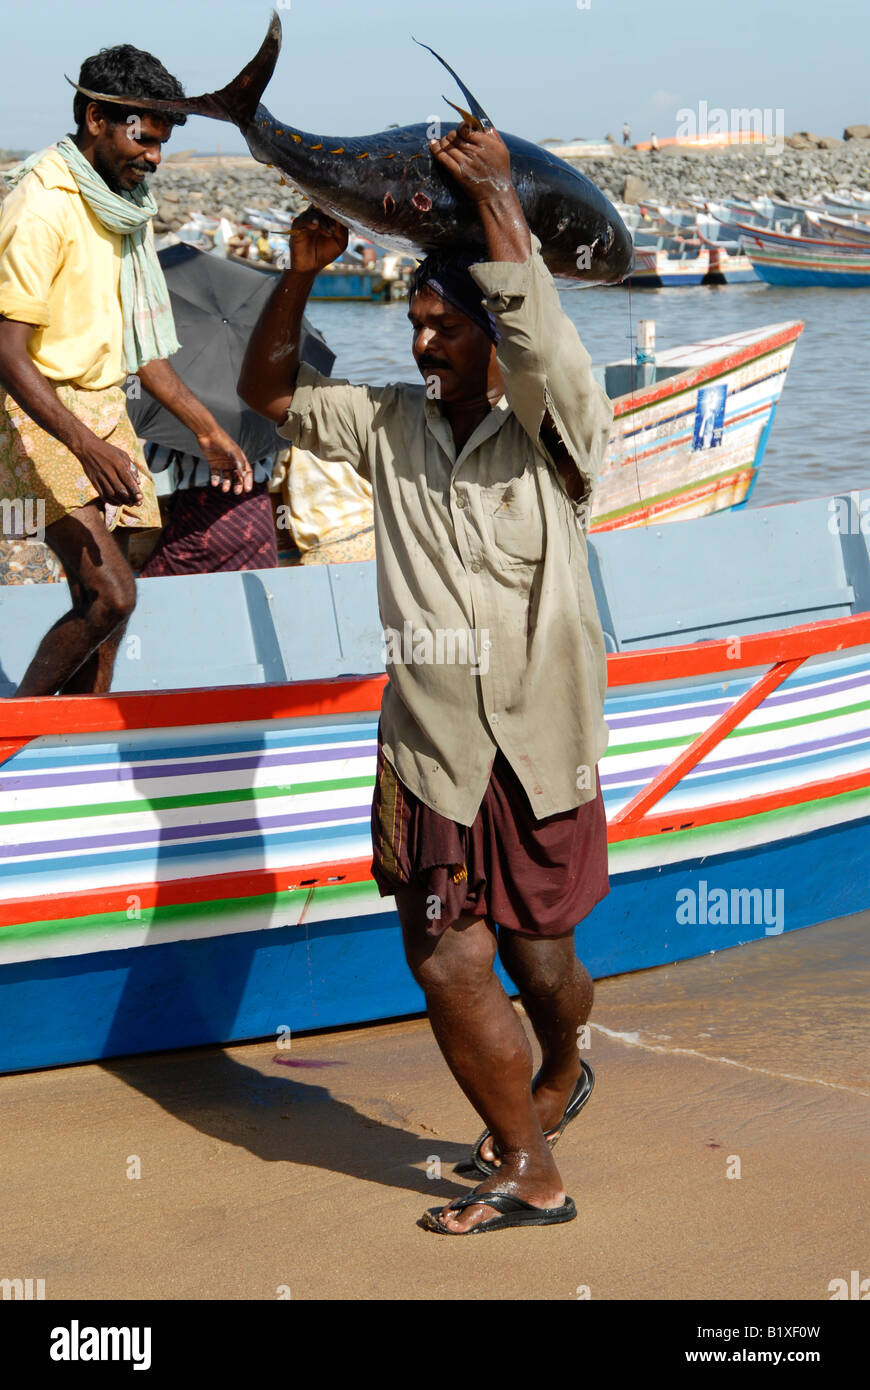 A fisherman carrying a big fish catch Stock Photo - Alamy